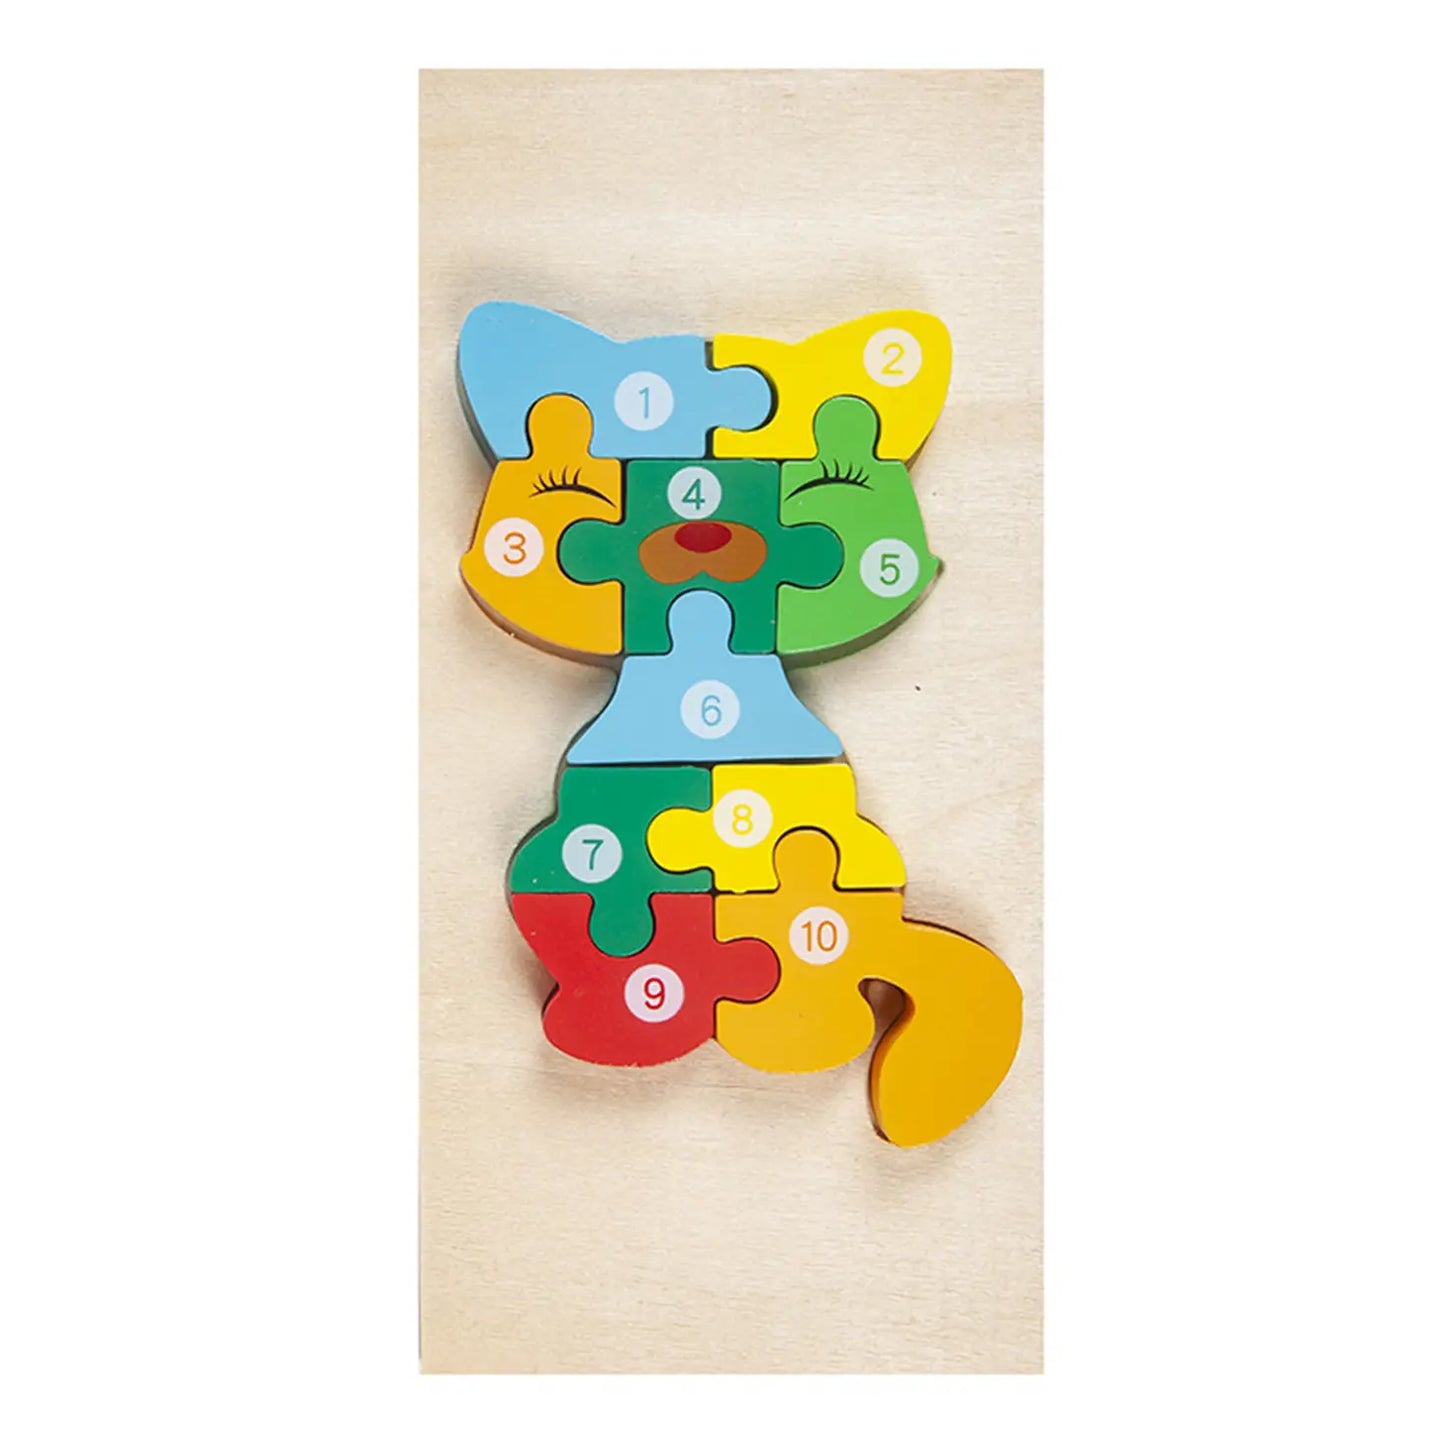 JSBlueRidge Toys - Dinosaur, Crocodile Giraffe, Numbered Puzzles Toy Stocking Stuffers Kids Toys